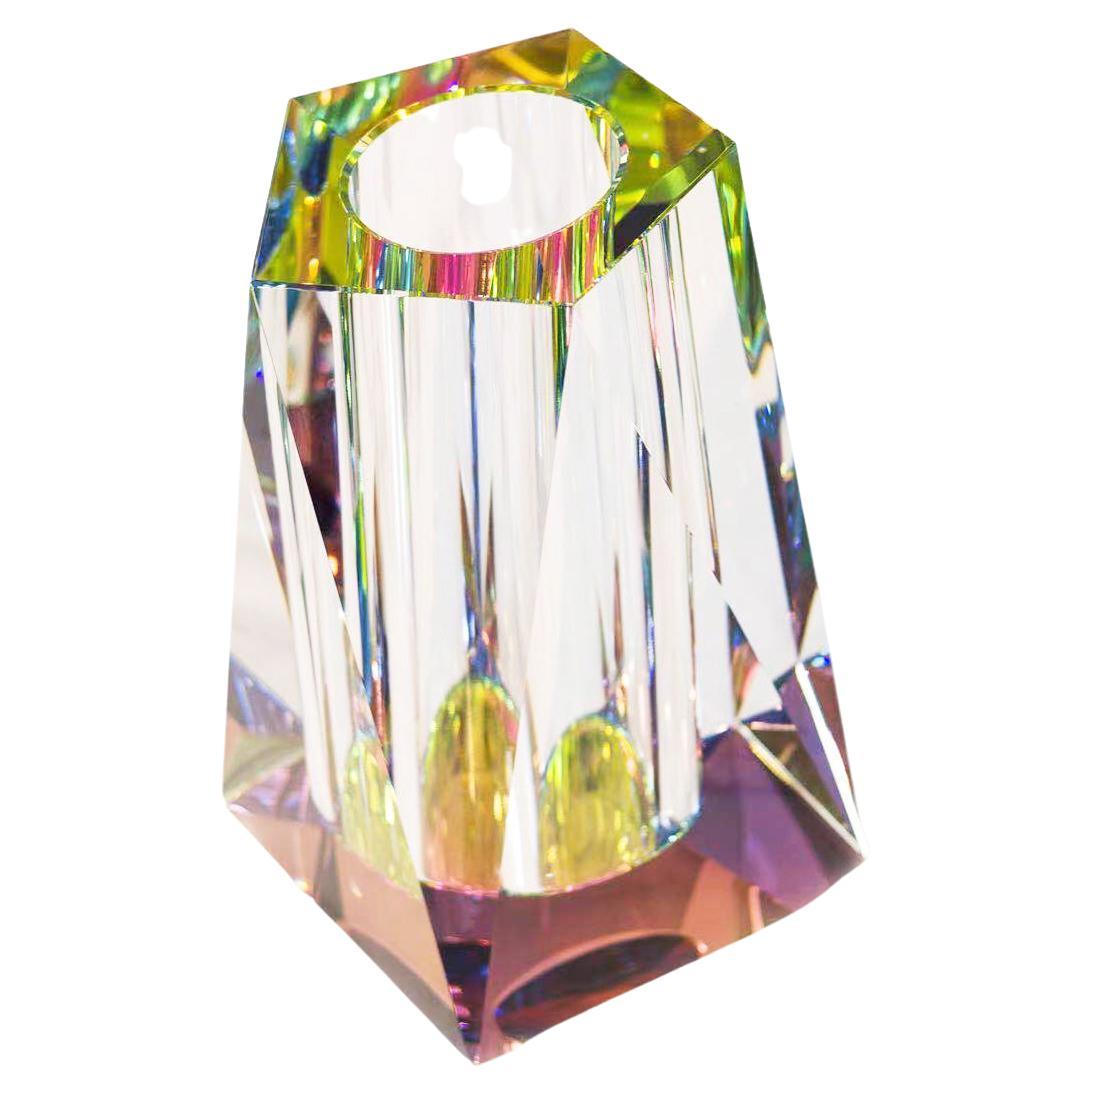 REGENBOGEN : Grand vase contemporain en cristal au plomb en vente